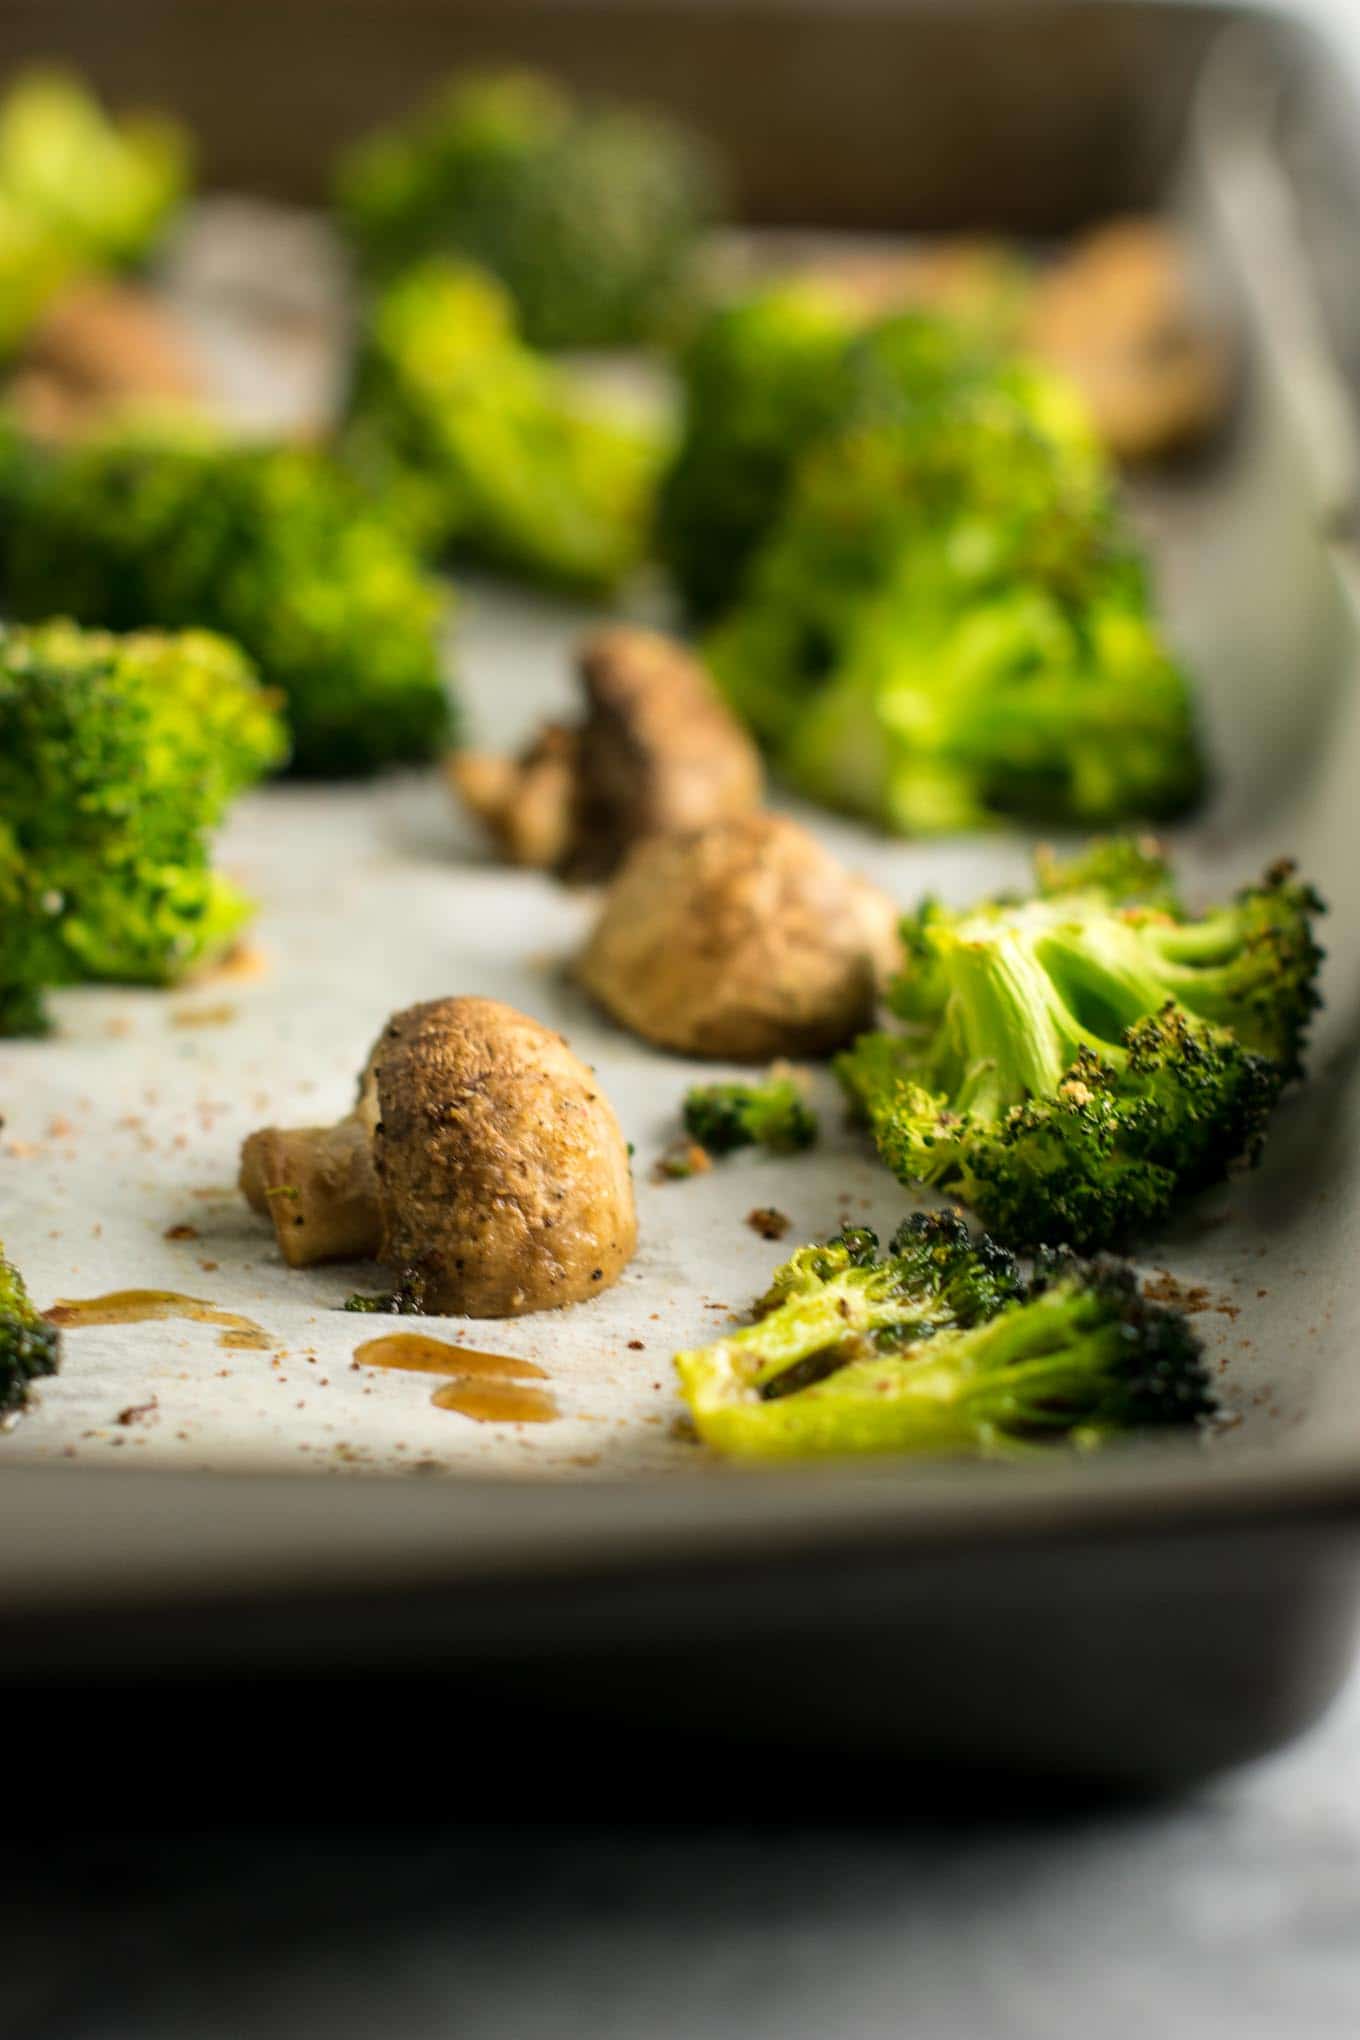 Roasted broccoli and mushrooms recipe - easy side dish! This was so easy and really good. We will be making it a lo! #broccoliandmushrooms #vegan #sidedish #dinner #glutenfree #broccoli #mushrooms #easysidedish #mushrooms